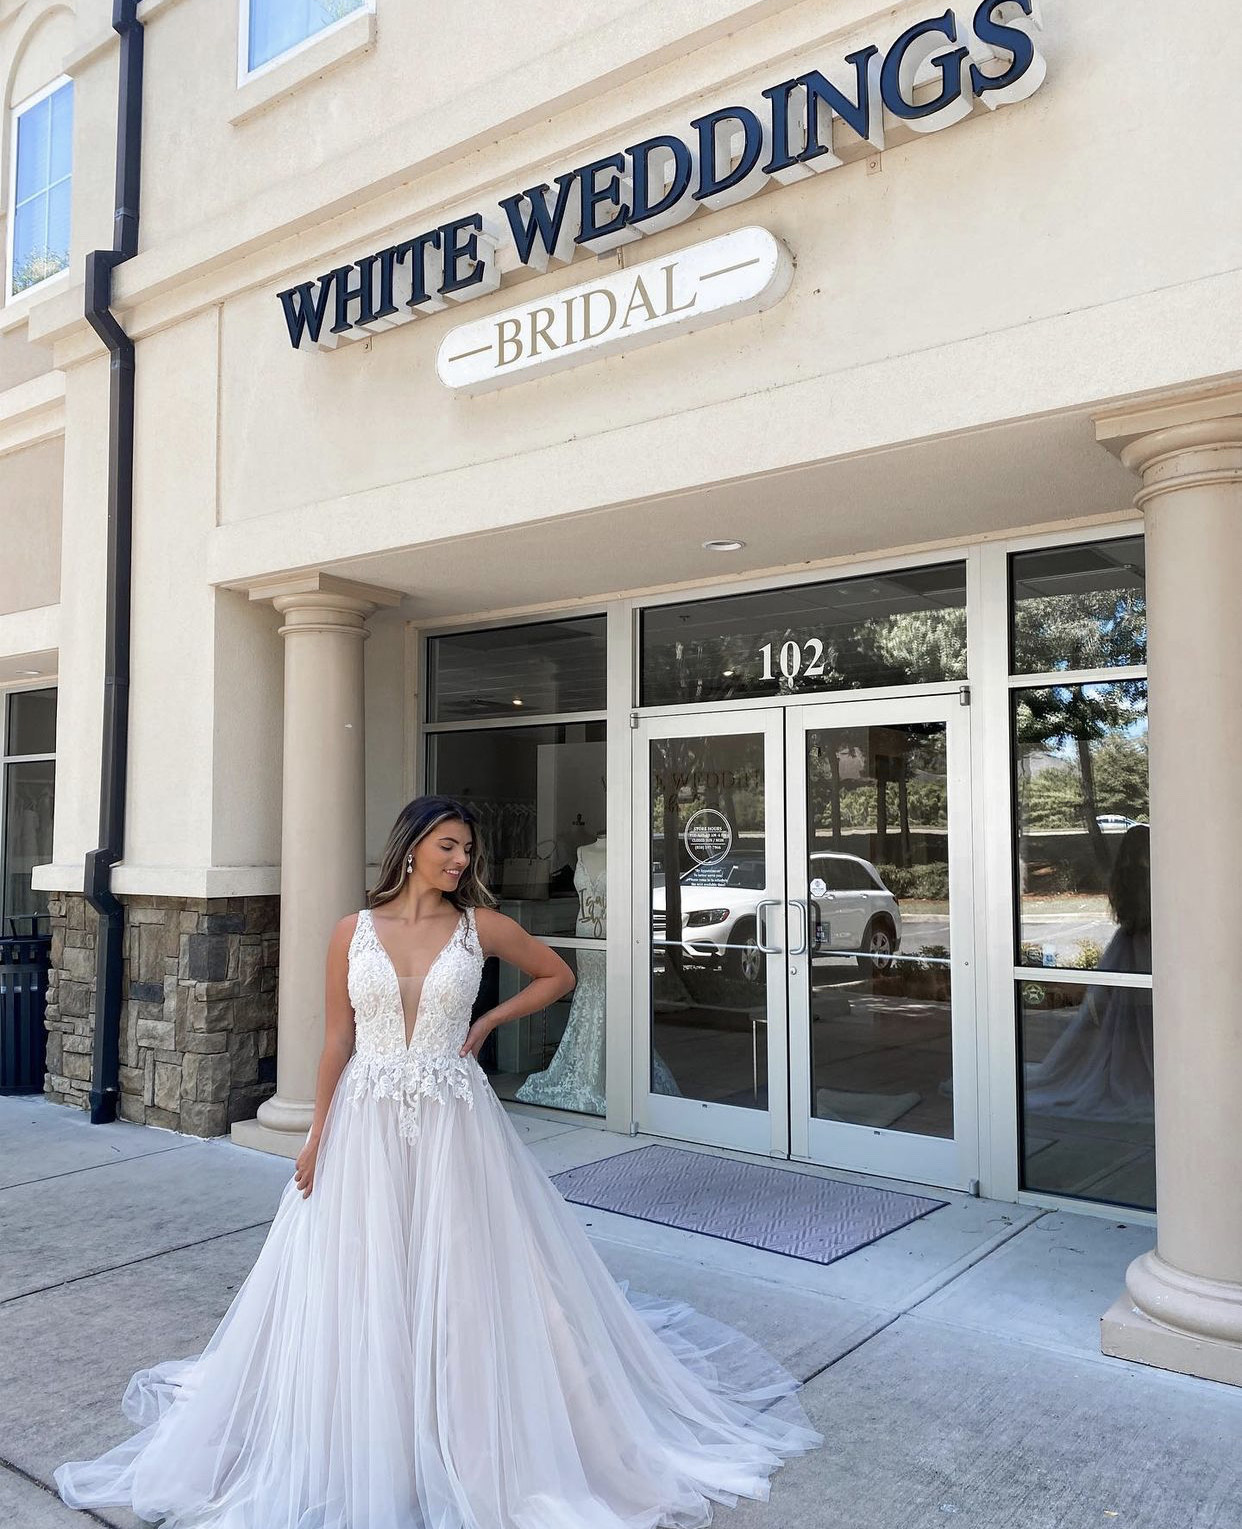 White Weddings Tallahassee